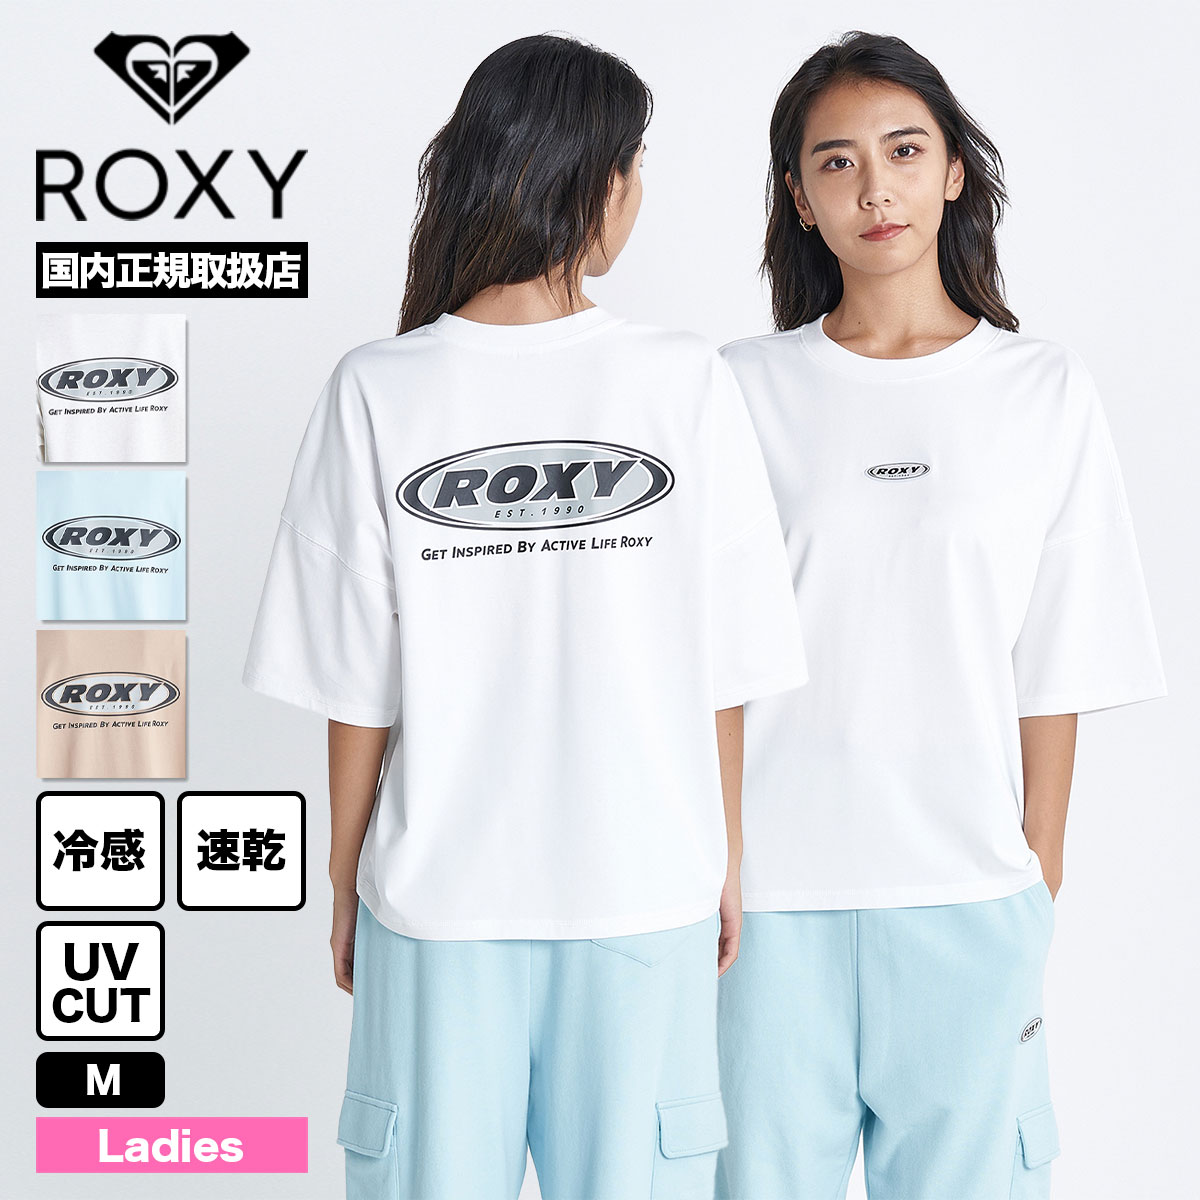 ROXY ロキシー 正規品販売店、ジャックオーシャンスポーツ